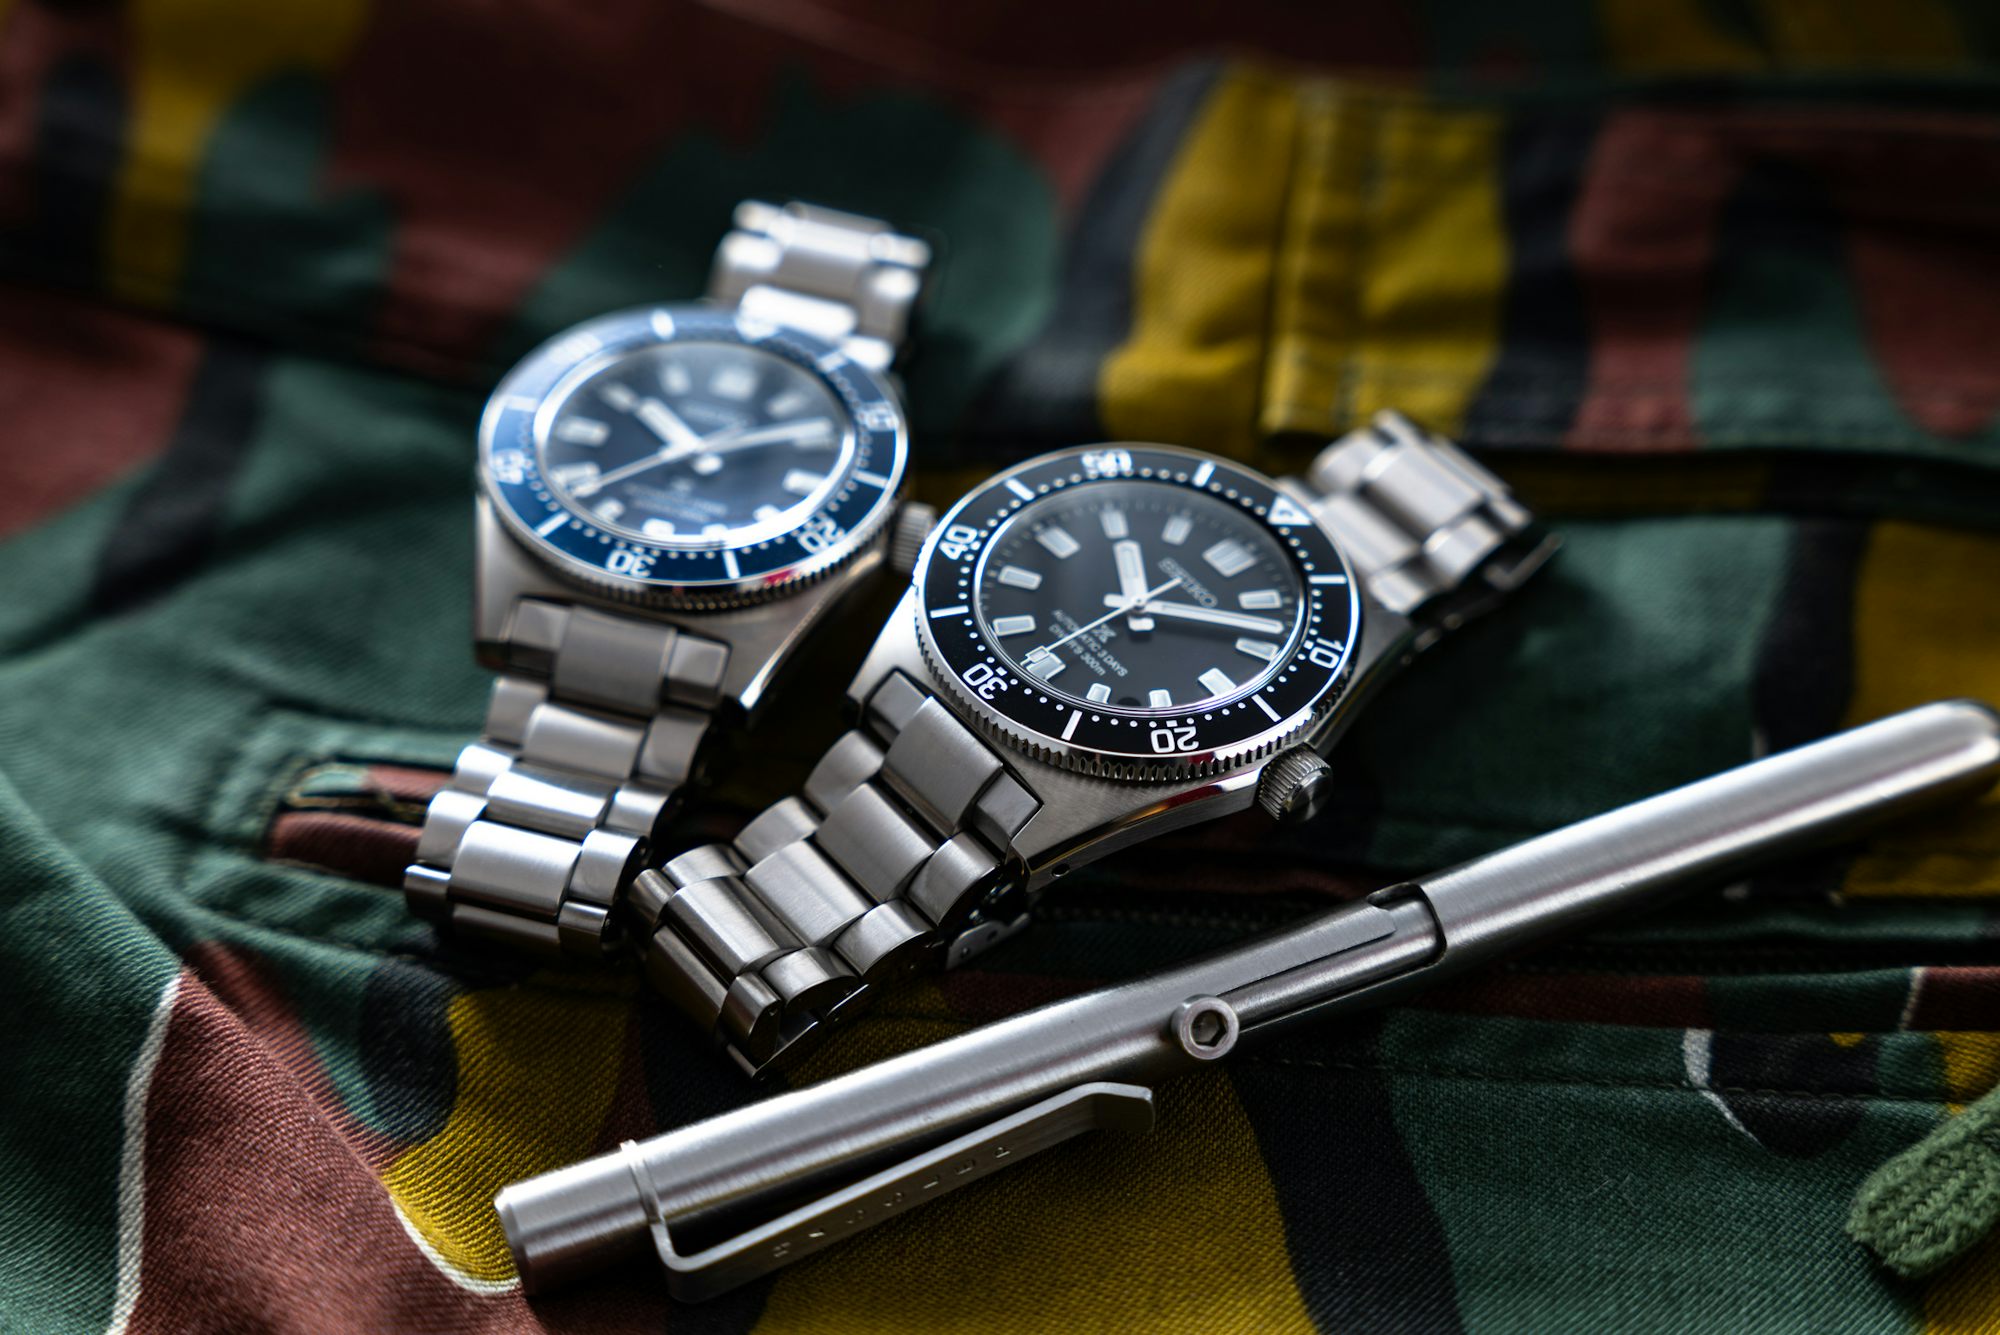 the seiko spb453 dive watch